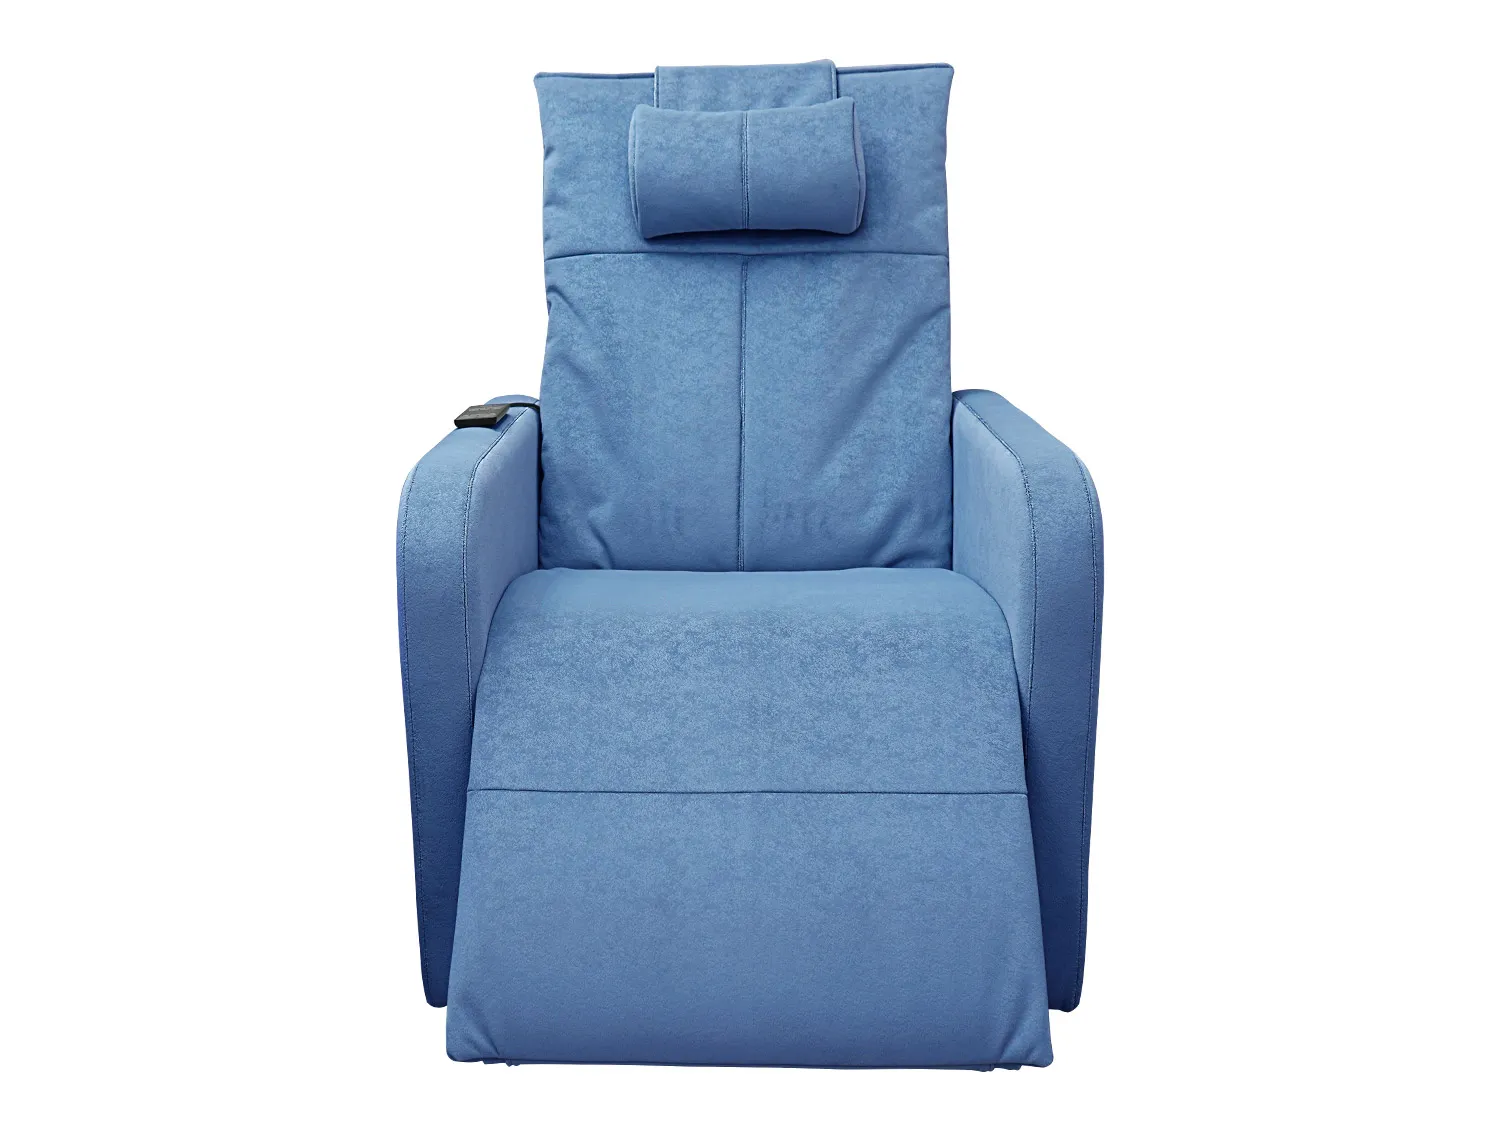 Массажное кресло реклайнер с подъемом FUJIMO LIFT CHAIR F3005 FLFK цвет на заказ - 4 